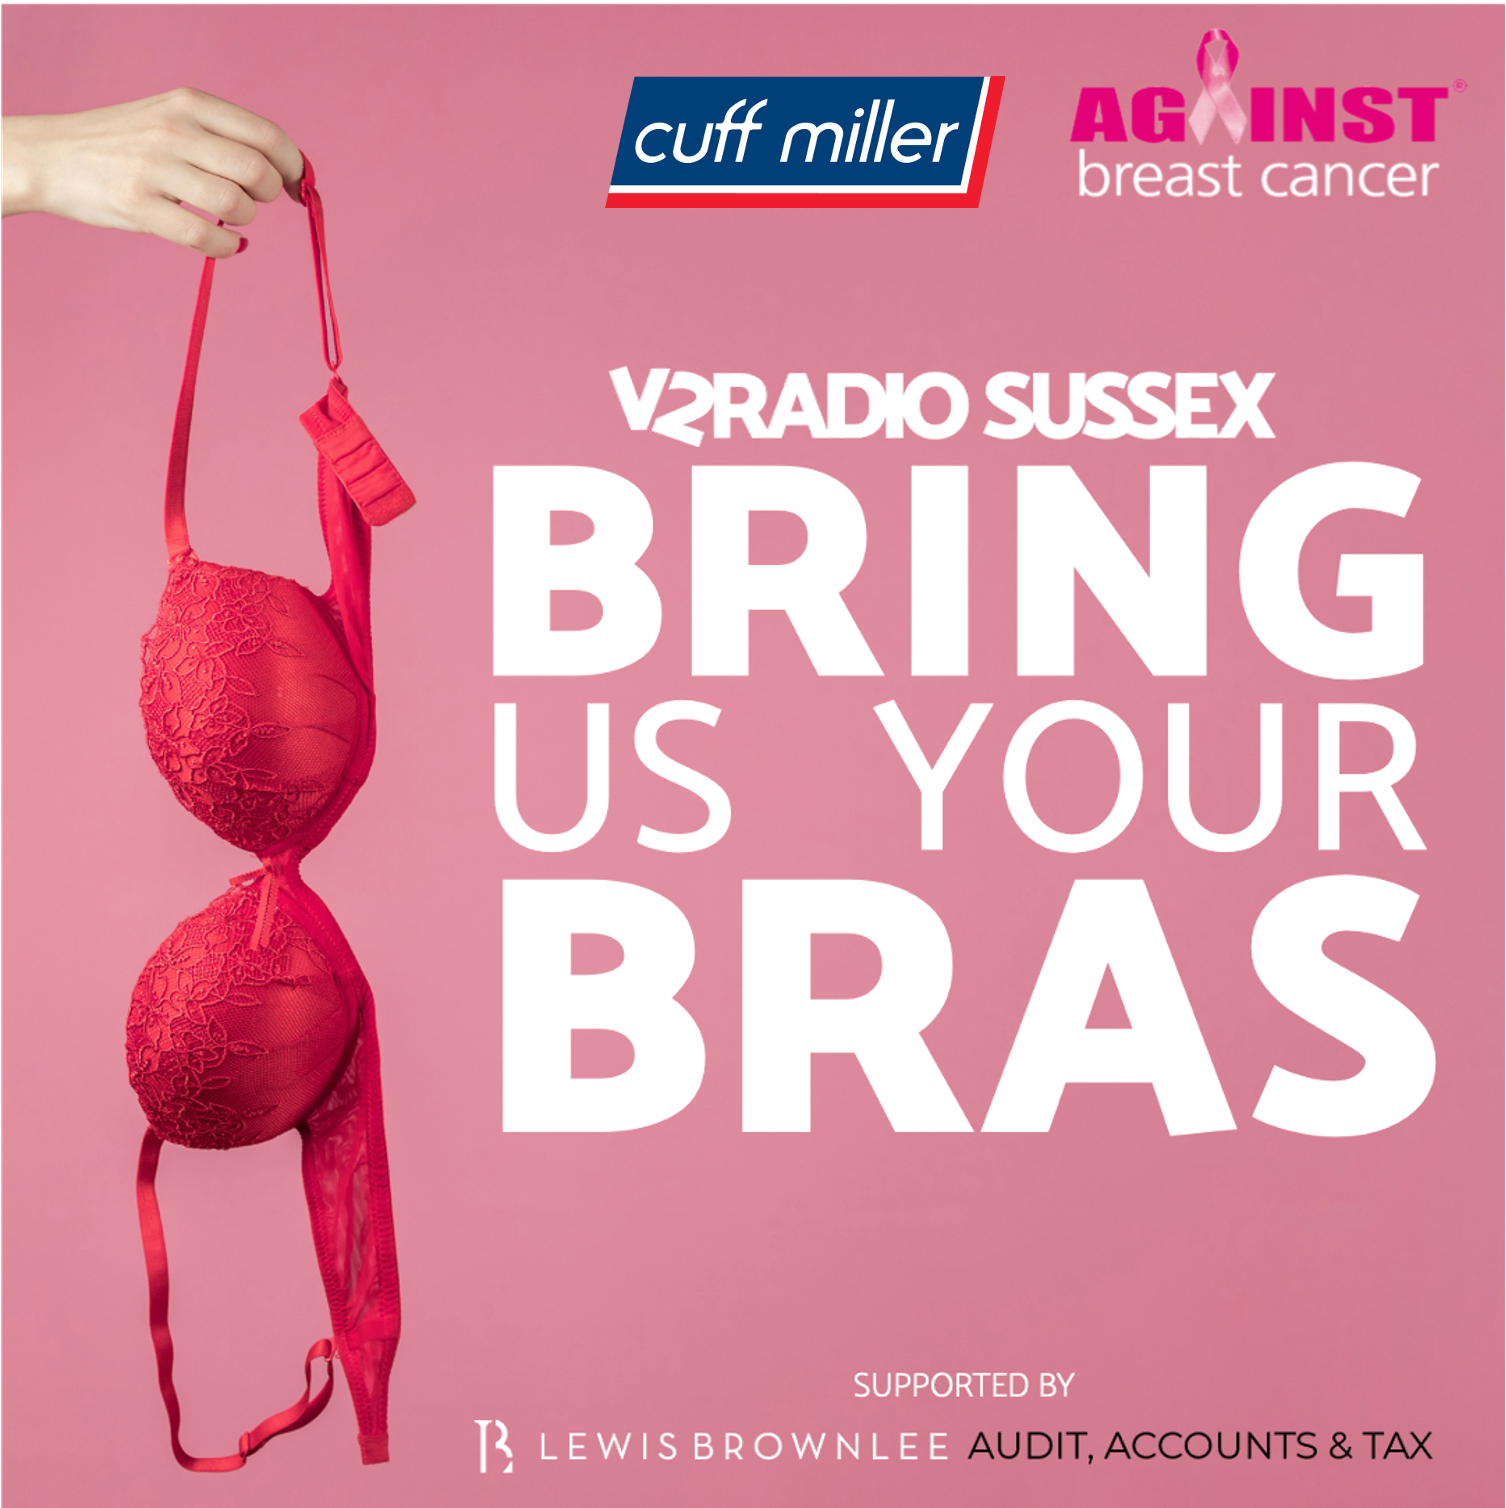 Bring Cuffs your bras! - Help us fight breast cancer!